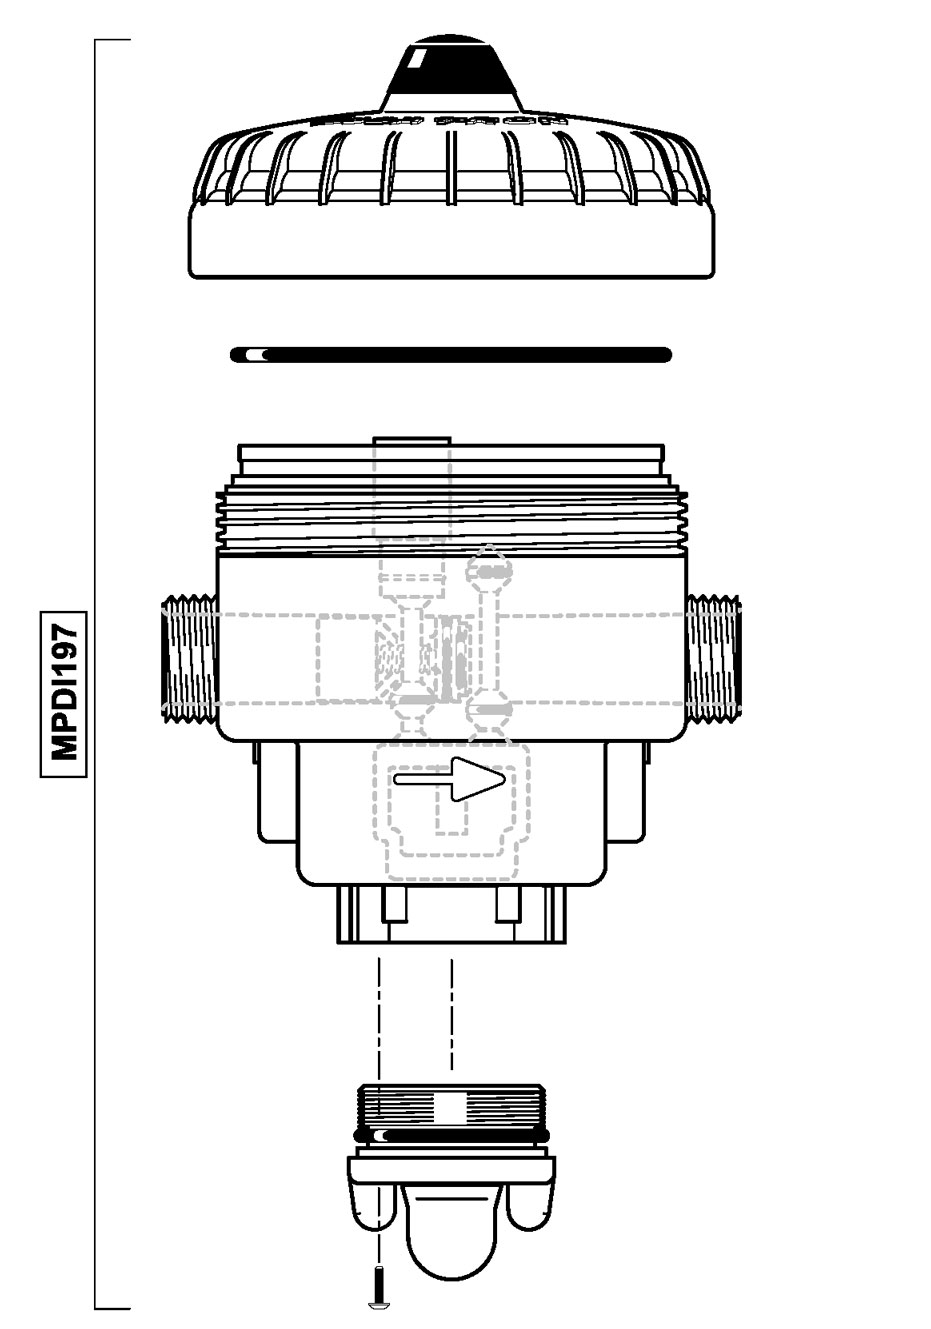 MPDI197VF - pump body blue + seal + bypass switch D07 series